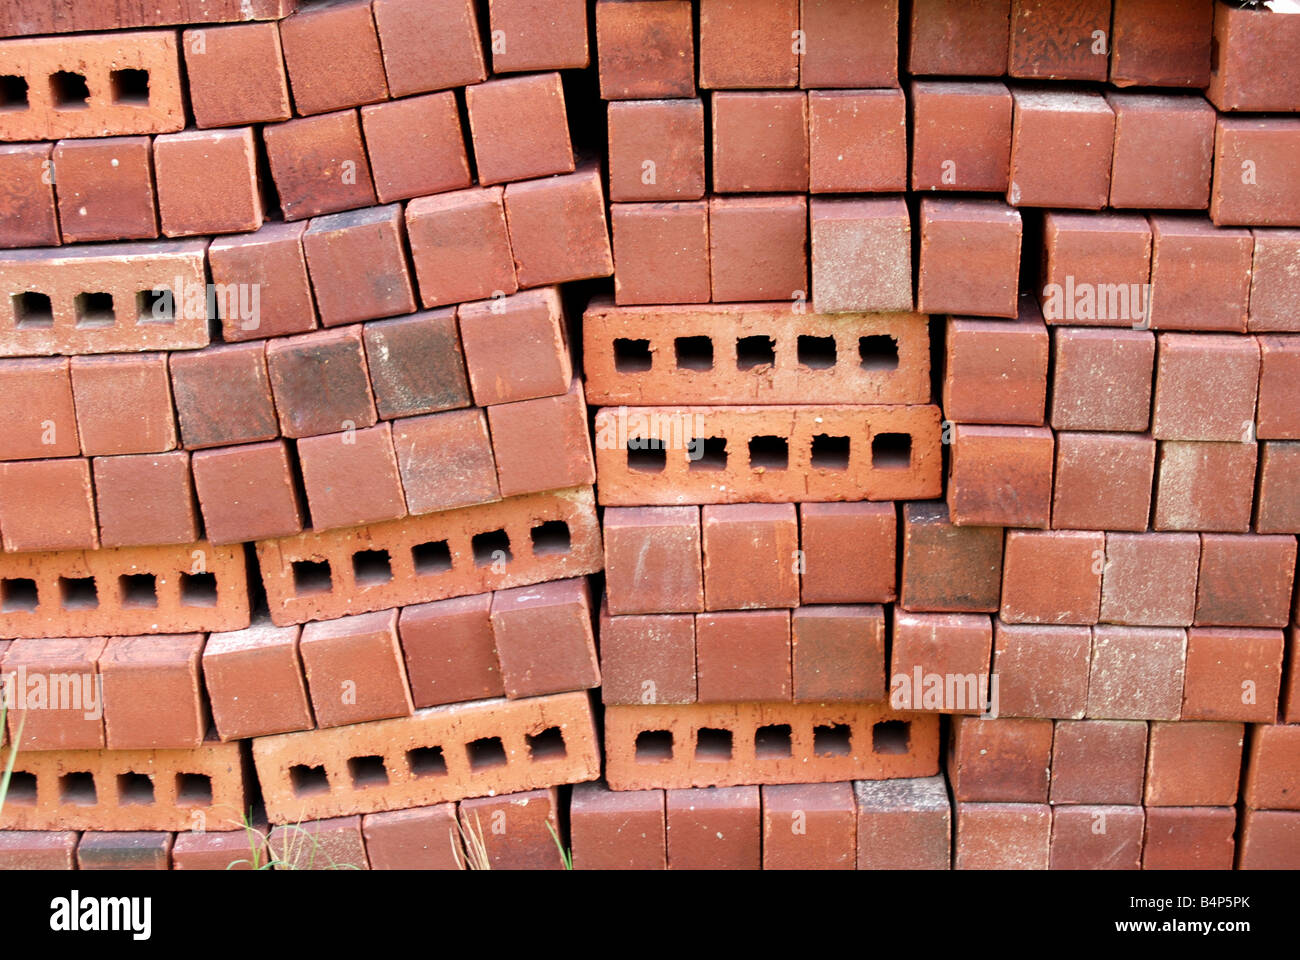 A pile of bricks Stock Photo